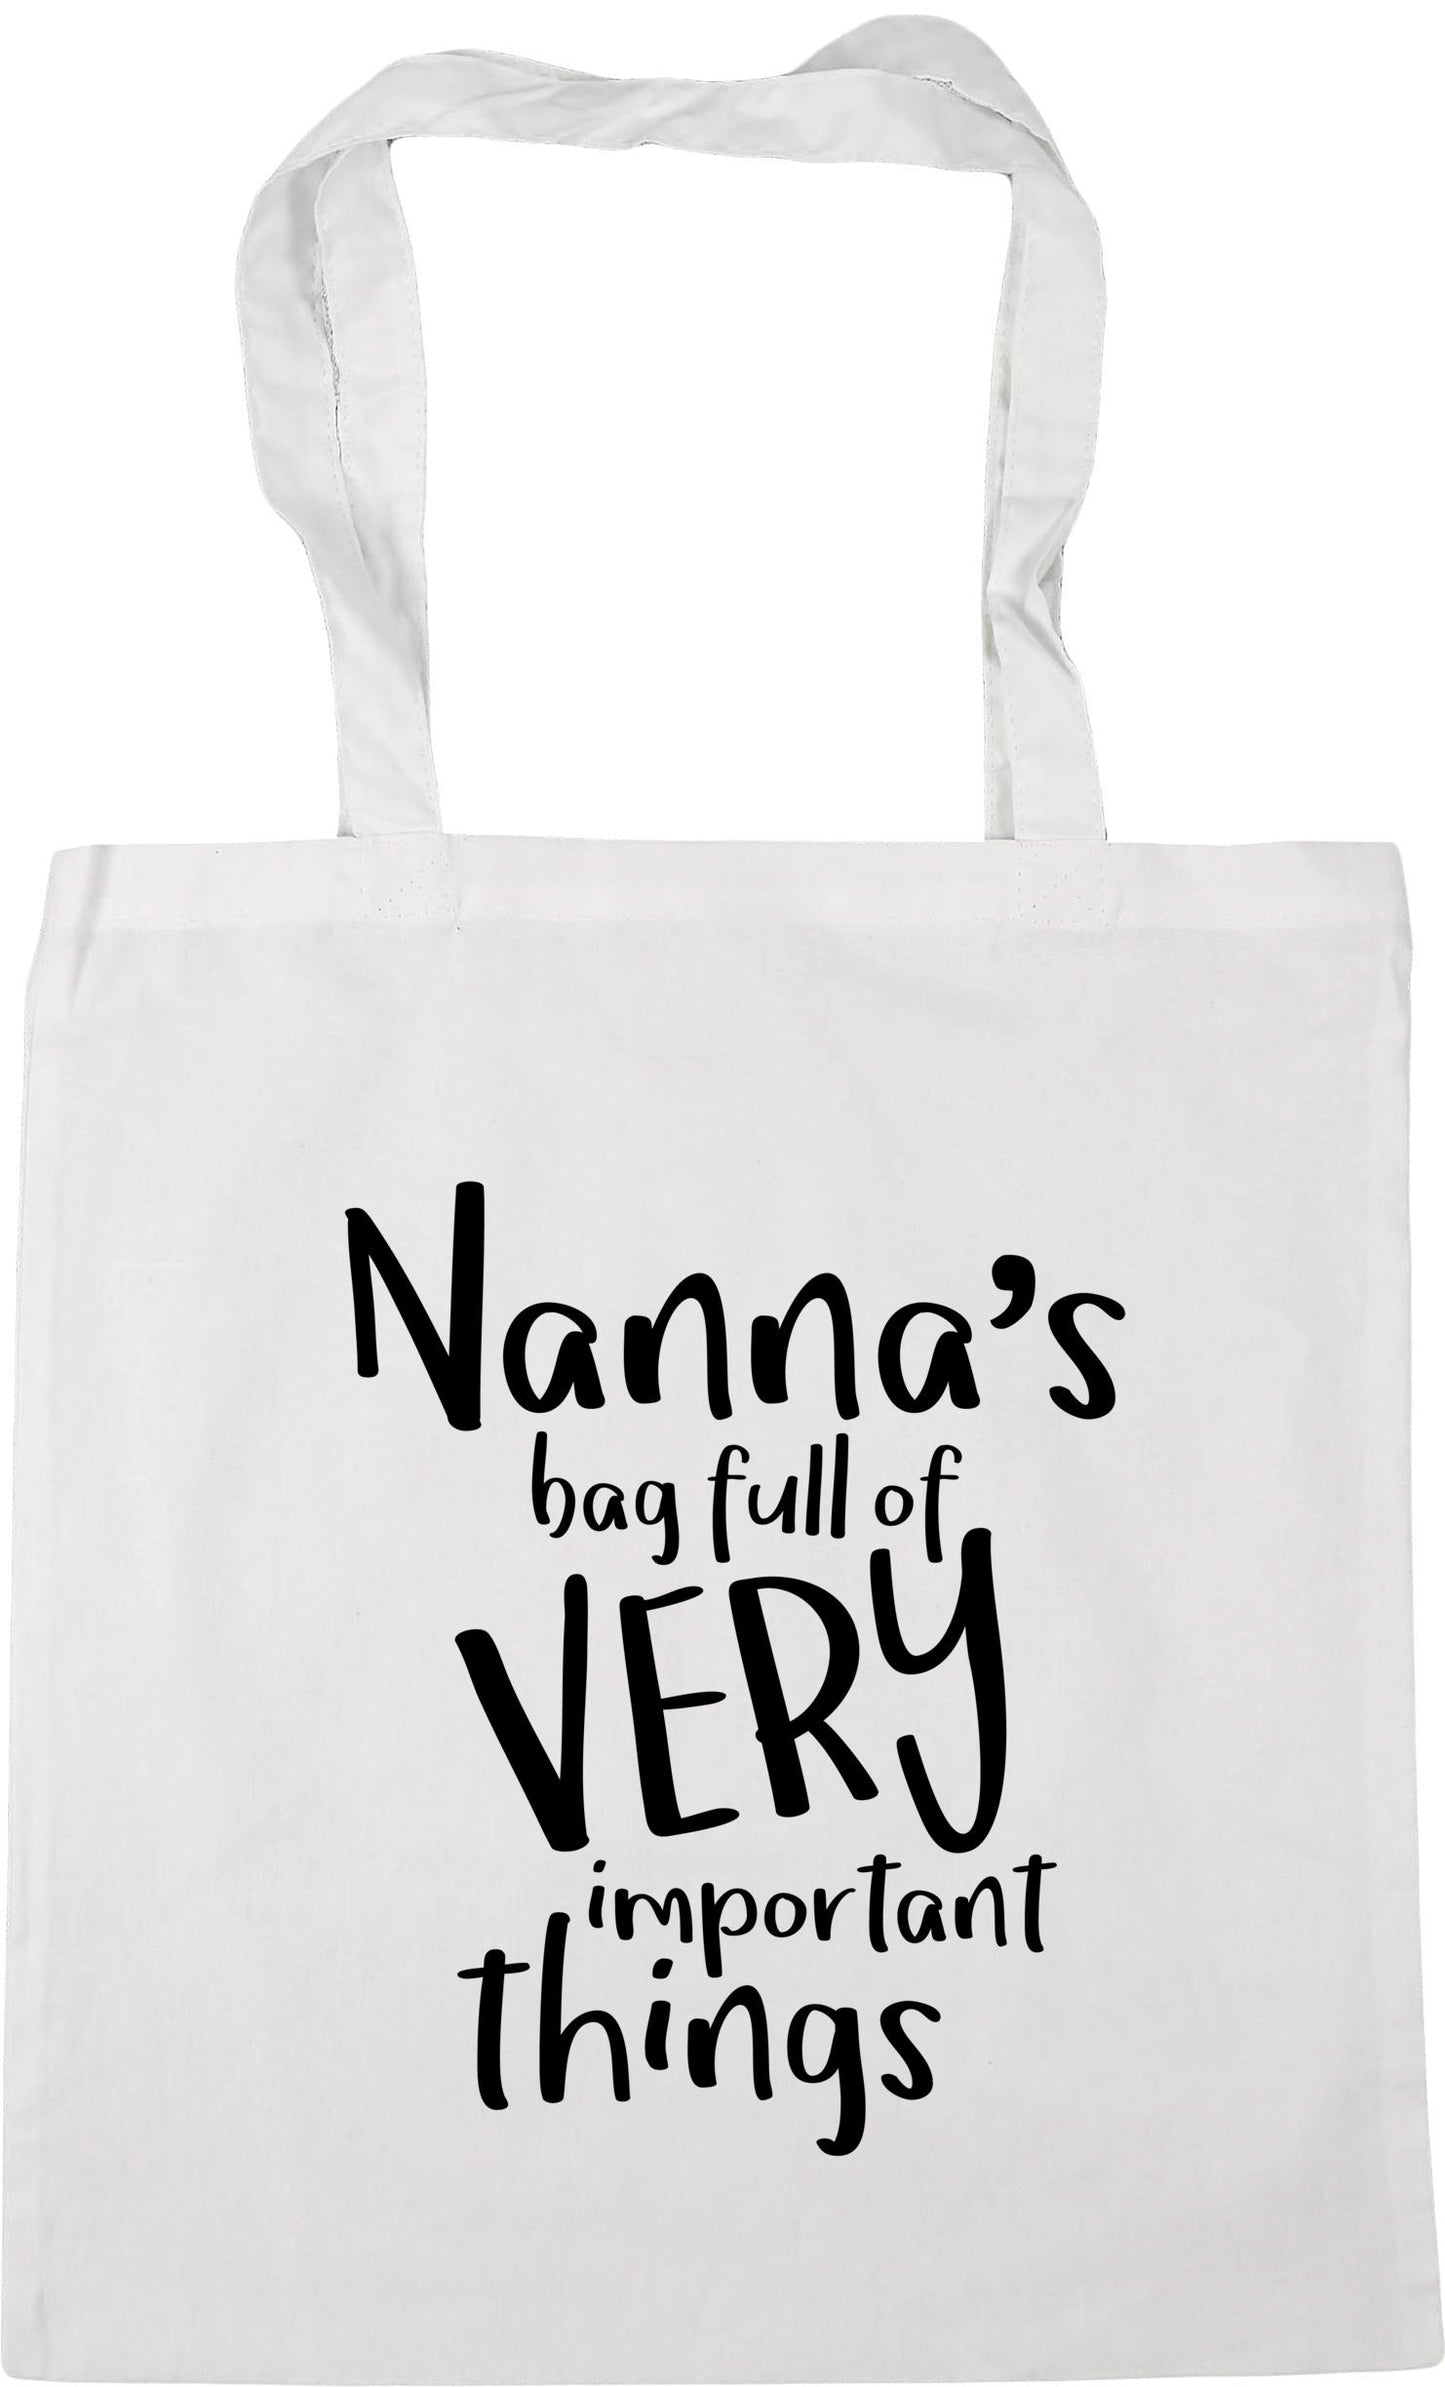 Nanna's Bag Full of Very Important Things Tote Bag